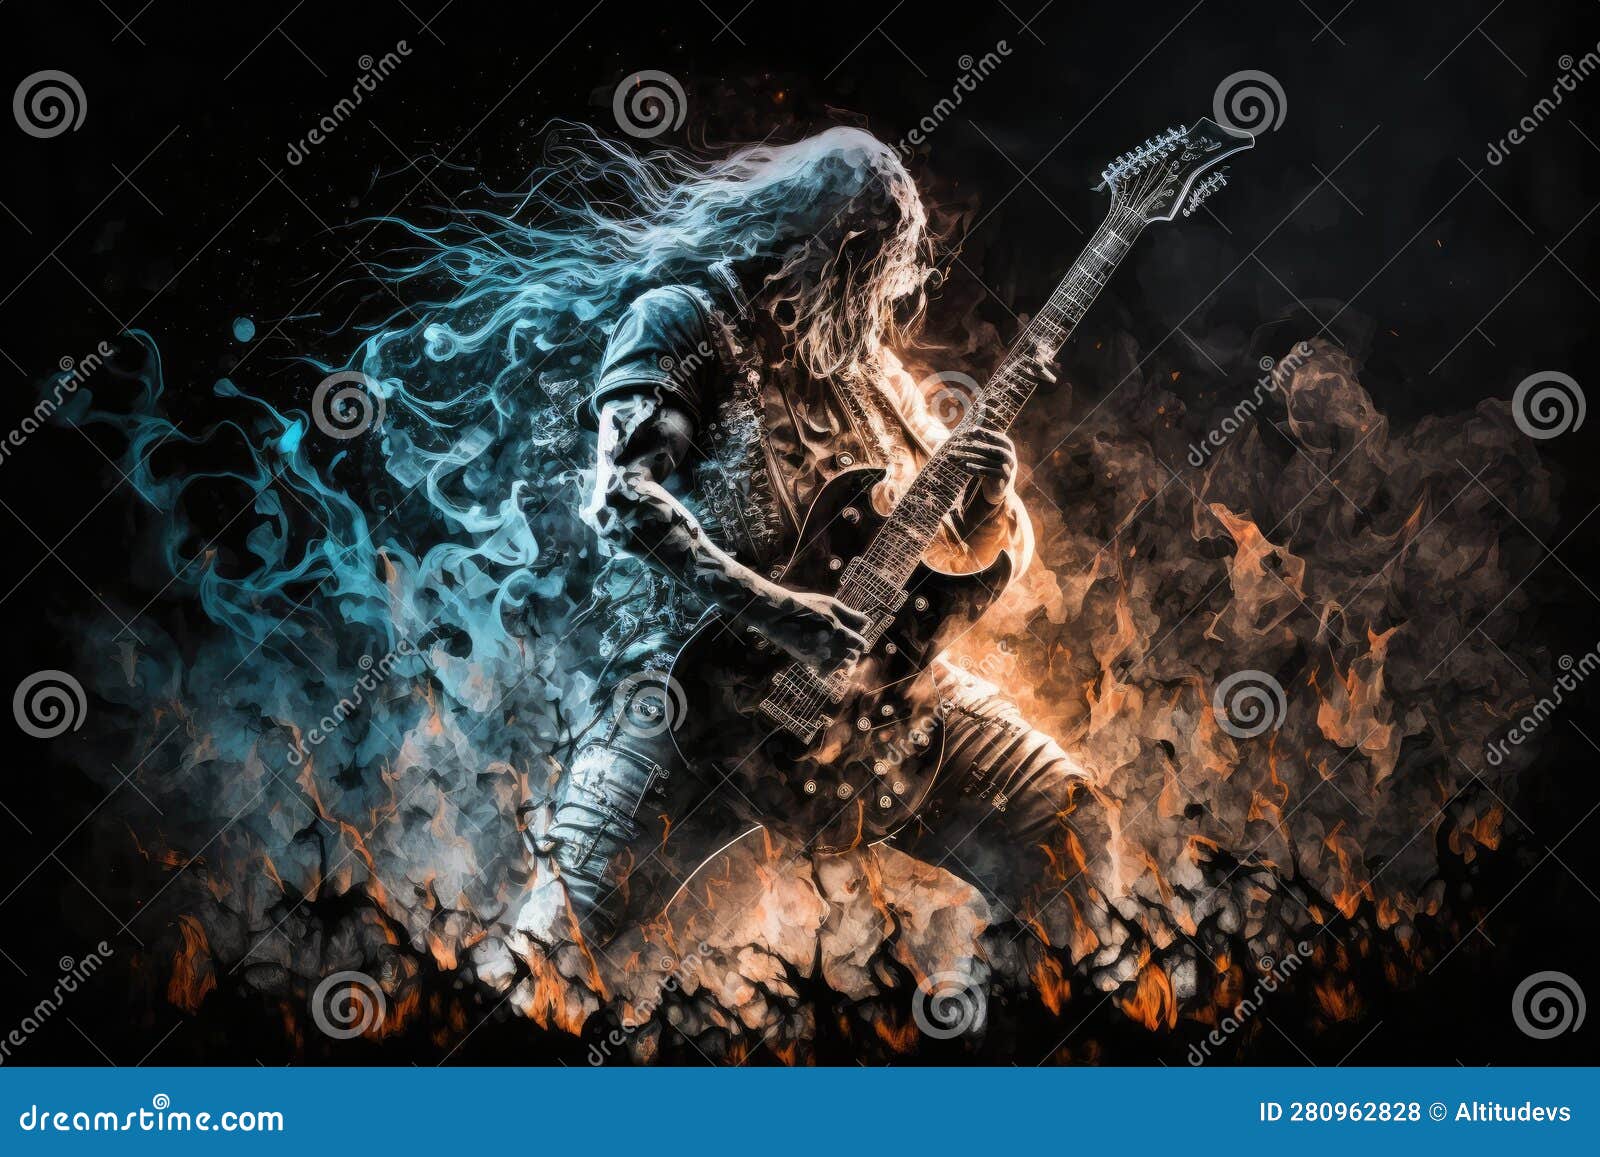 Premium Photo  Heavy metal guitarist shredding at full speed with